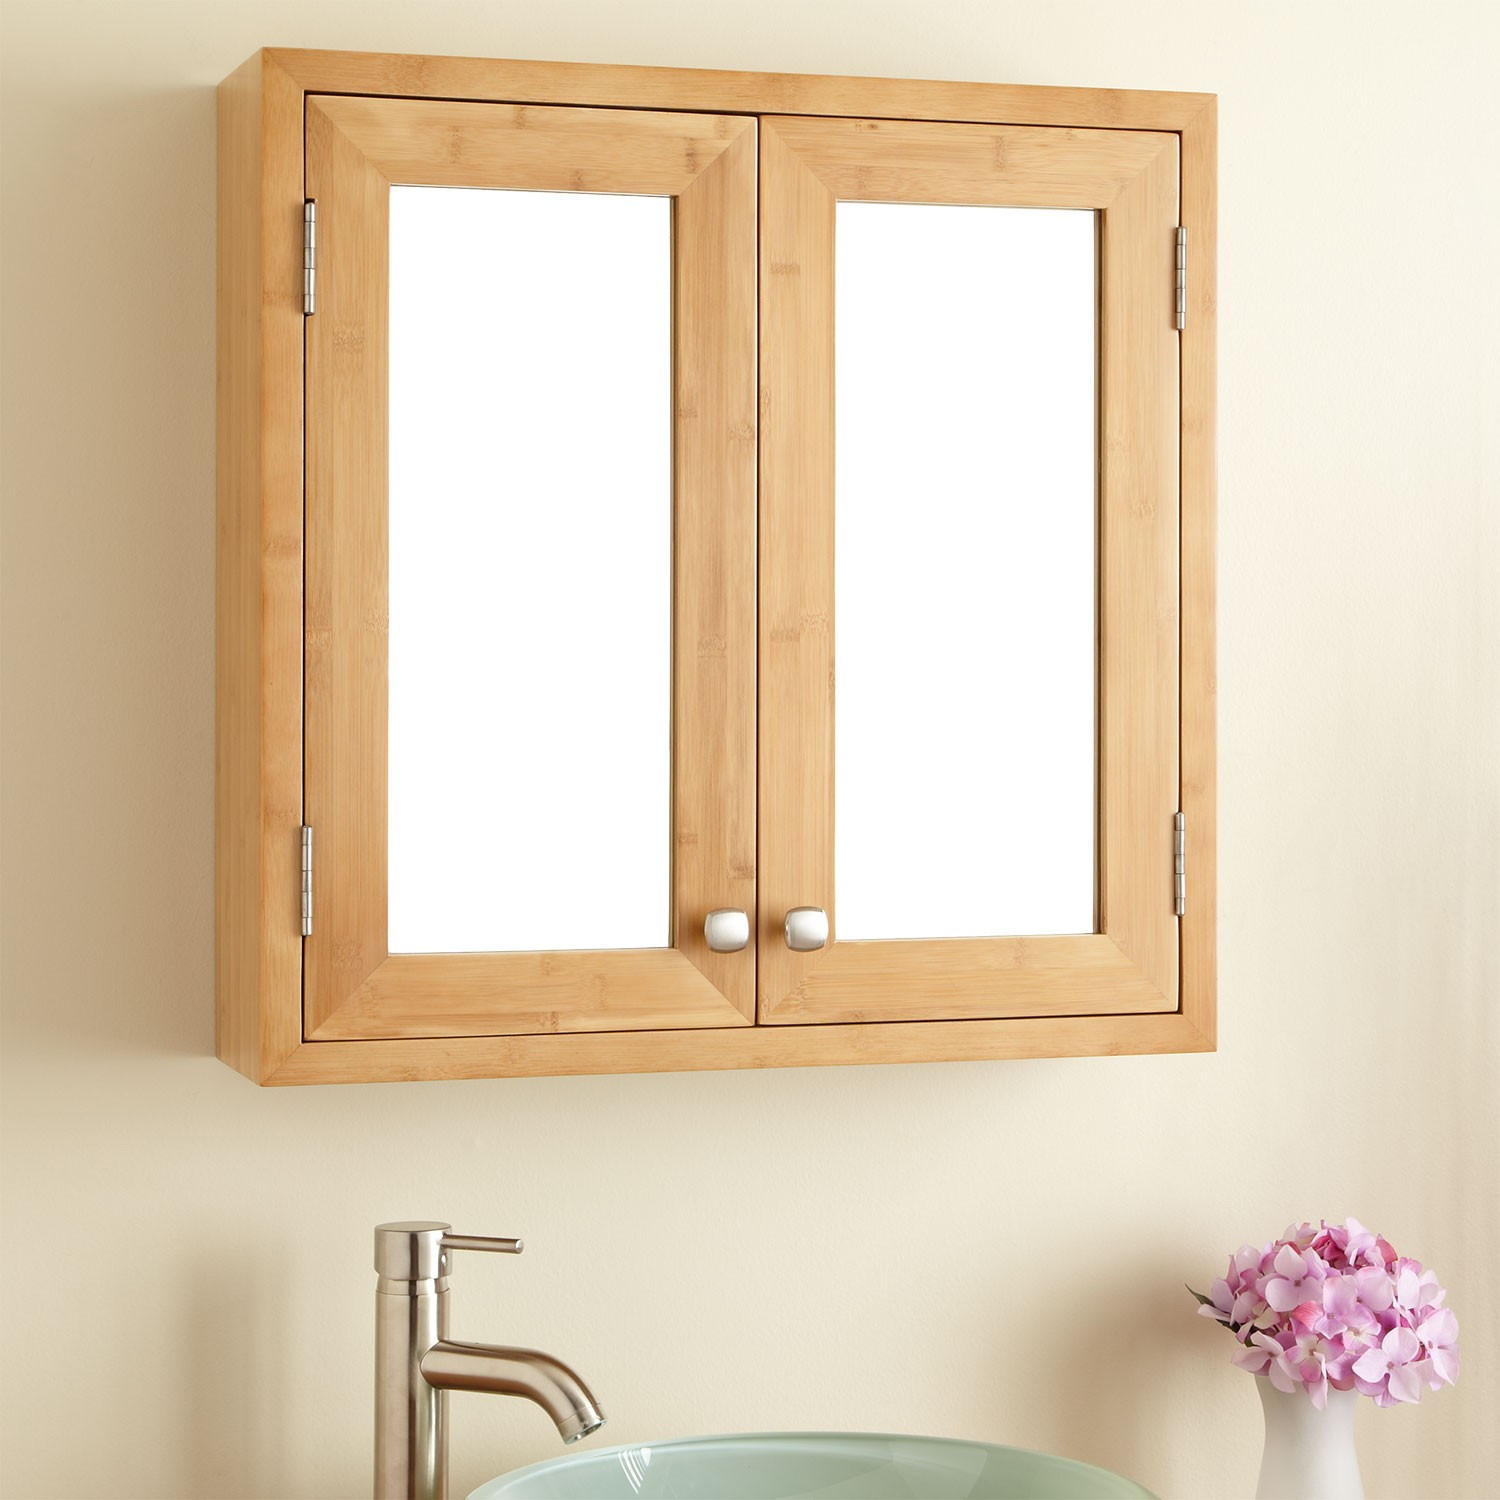 Mirrored Bathroom Medicine Cabinet
 Home Ideas & Home Designs Bathroom Medicine Cabinets with